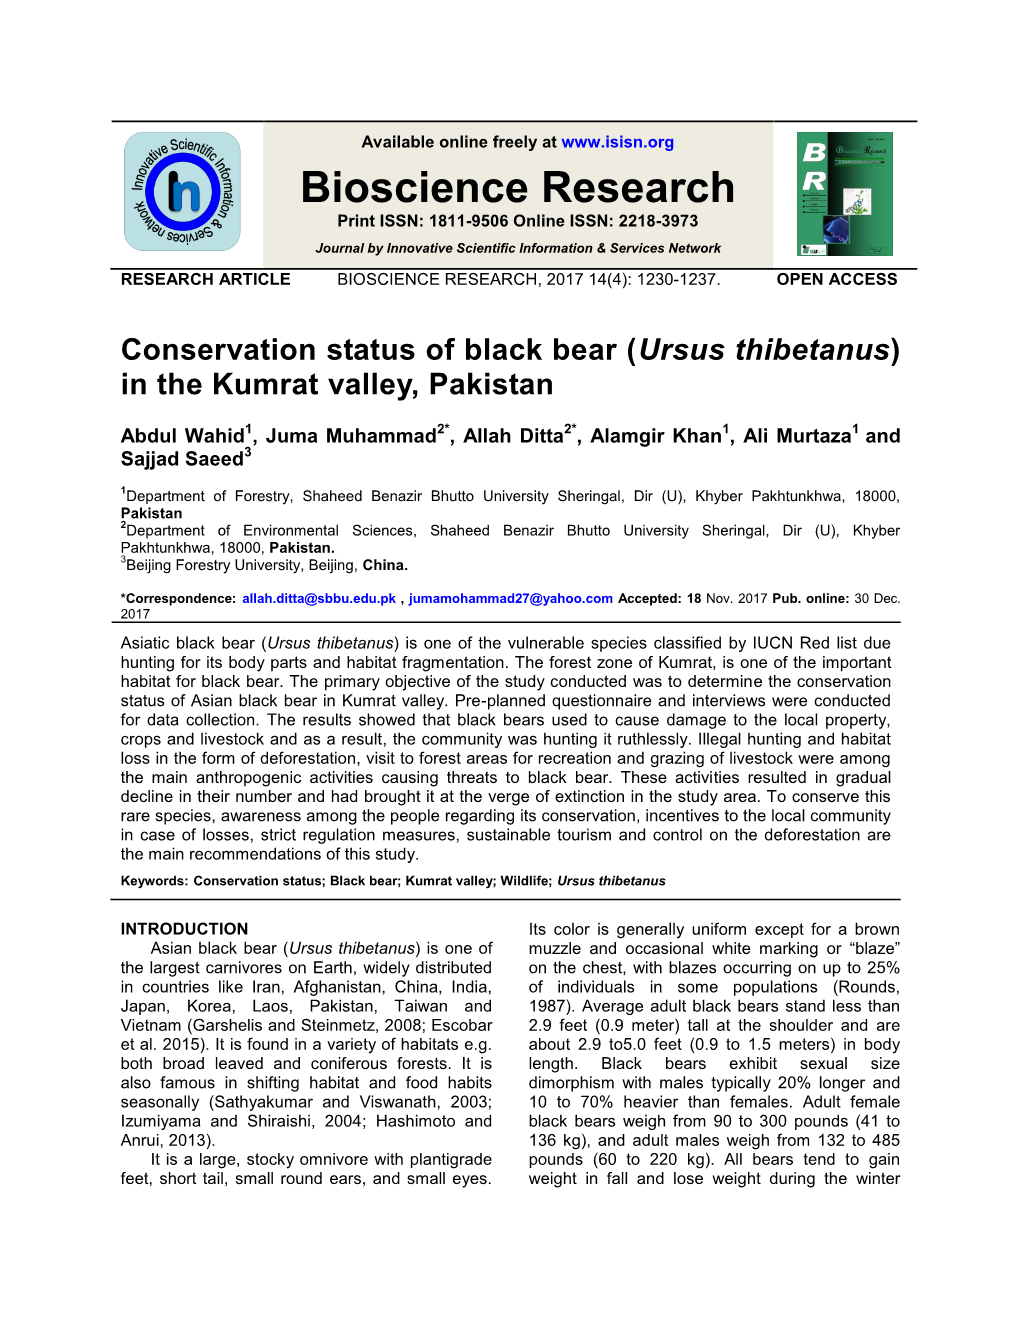 Conservation Status of Black Bear (Ursus Thibetanus) in the Kumrat Valley, Pakistan